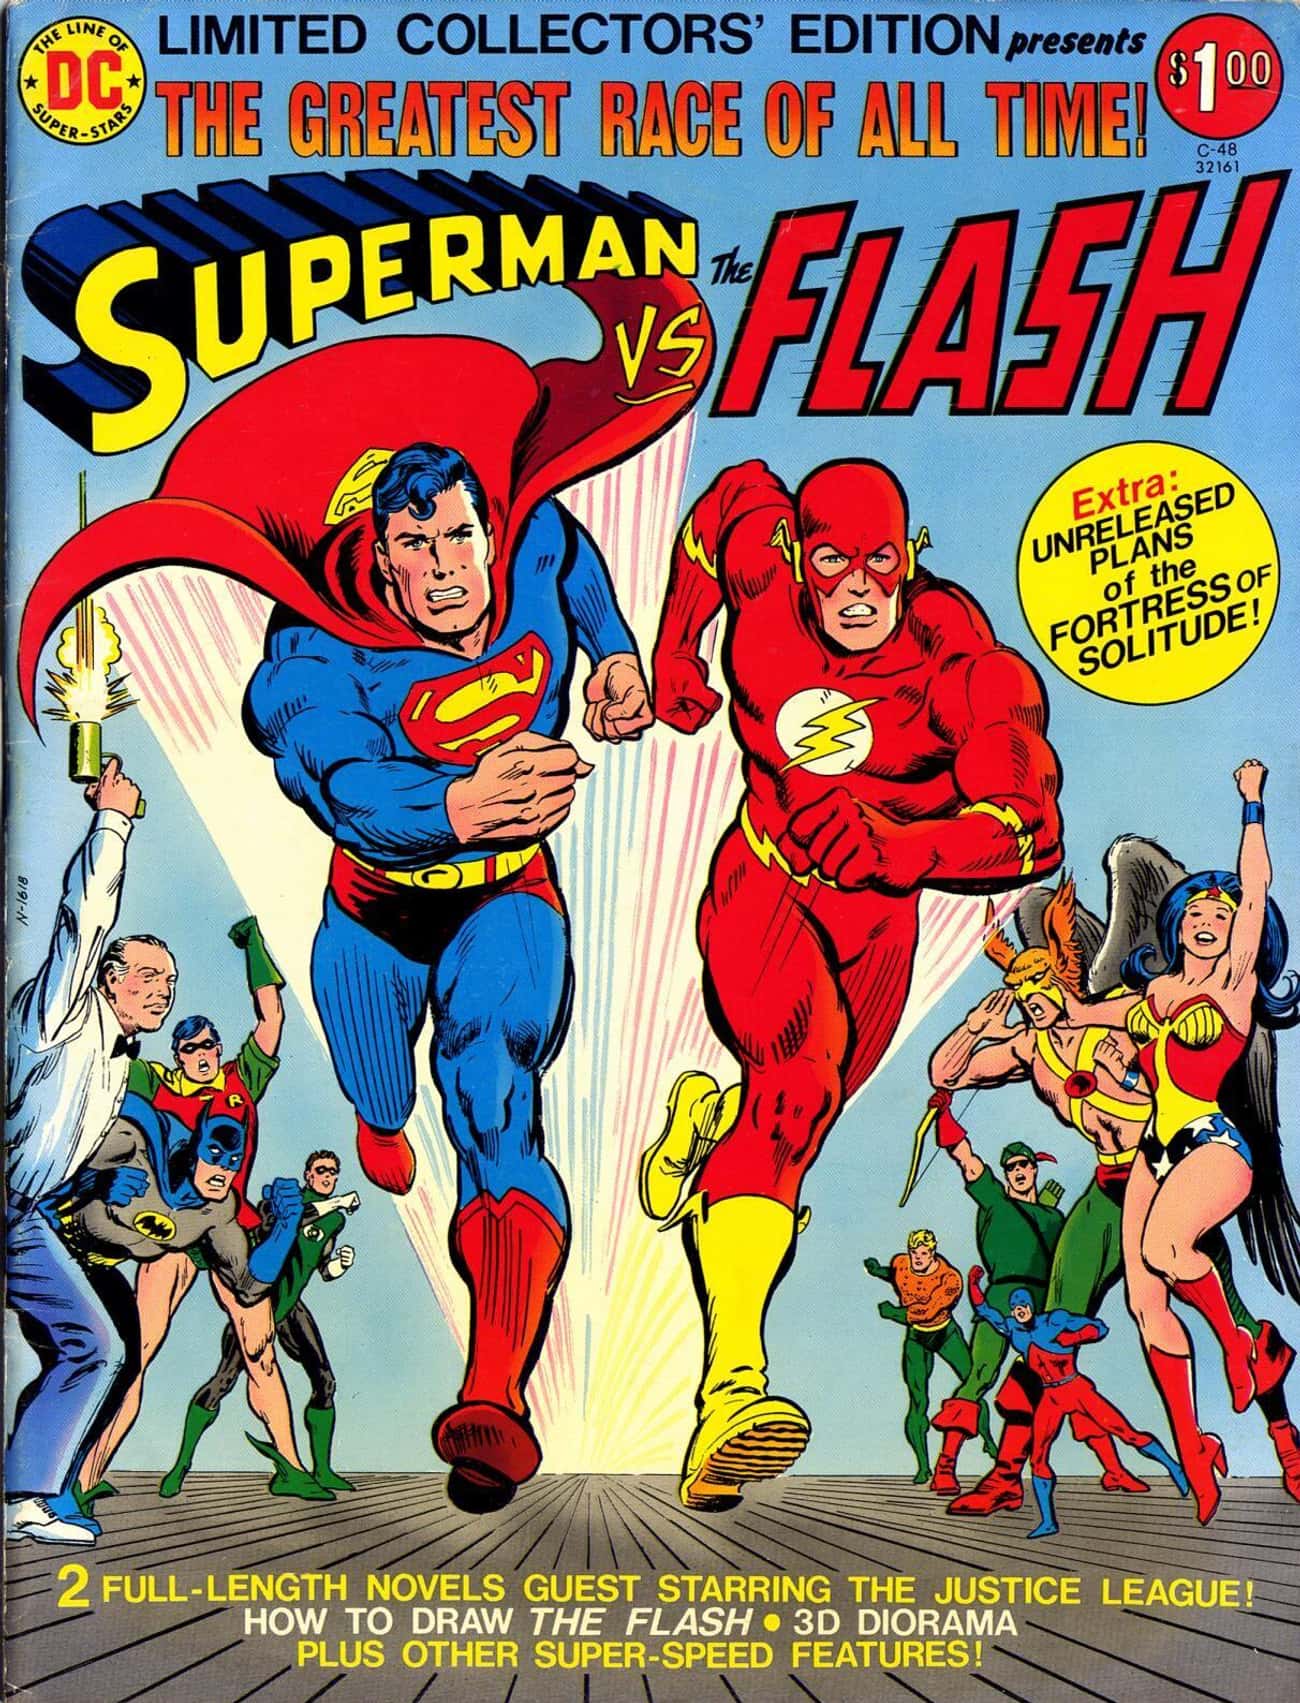 Superman speed up. Flash vs Superman. Superman Comics Cover. Superman Speed feats. Superhuman Race.